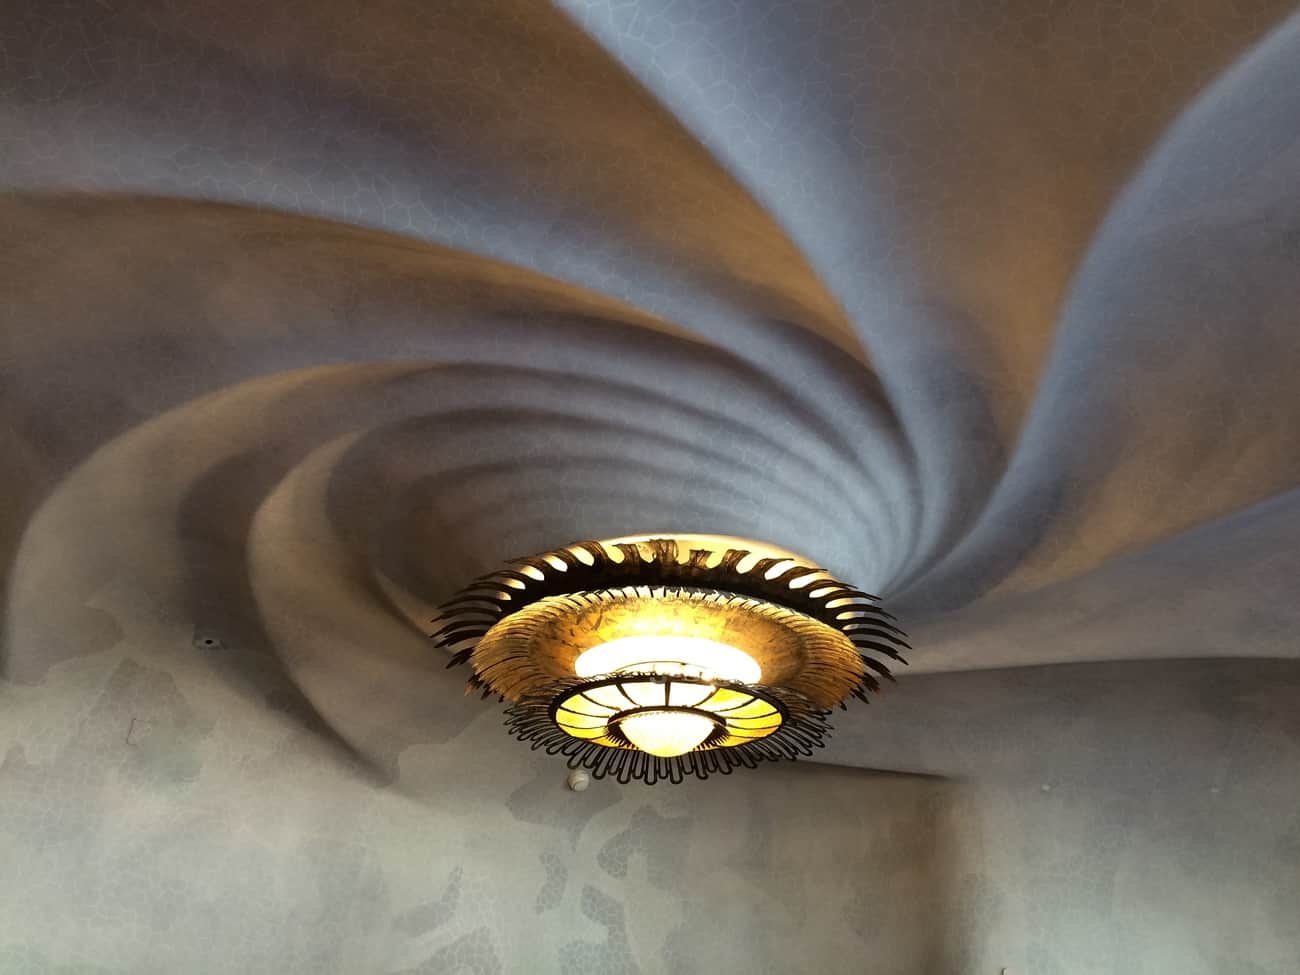 Barcelona - Casa Batllo swirling vortex ceiling